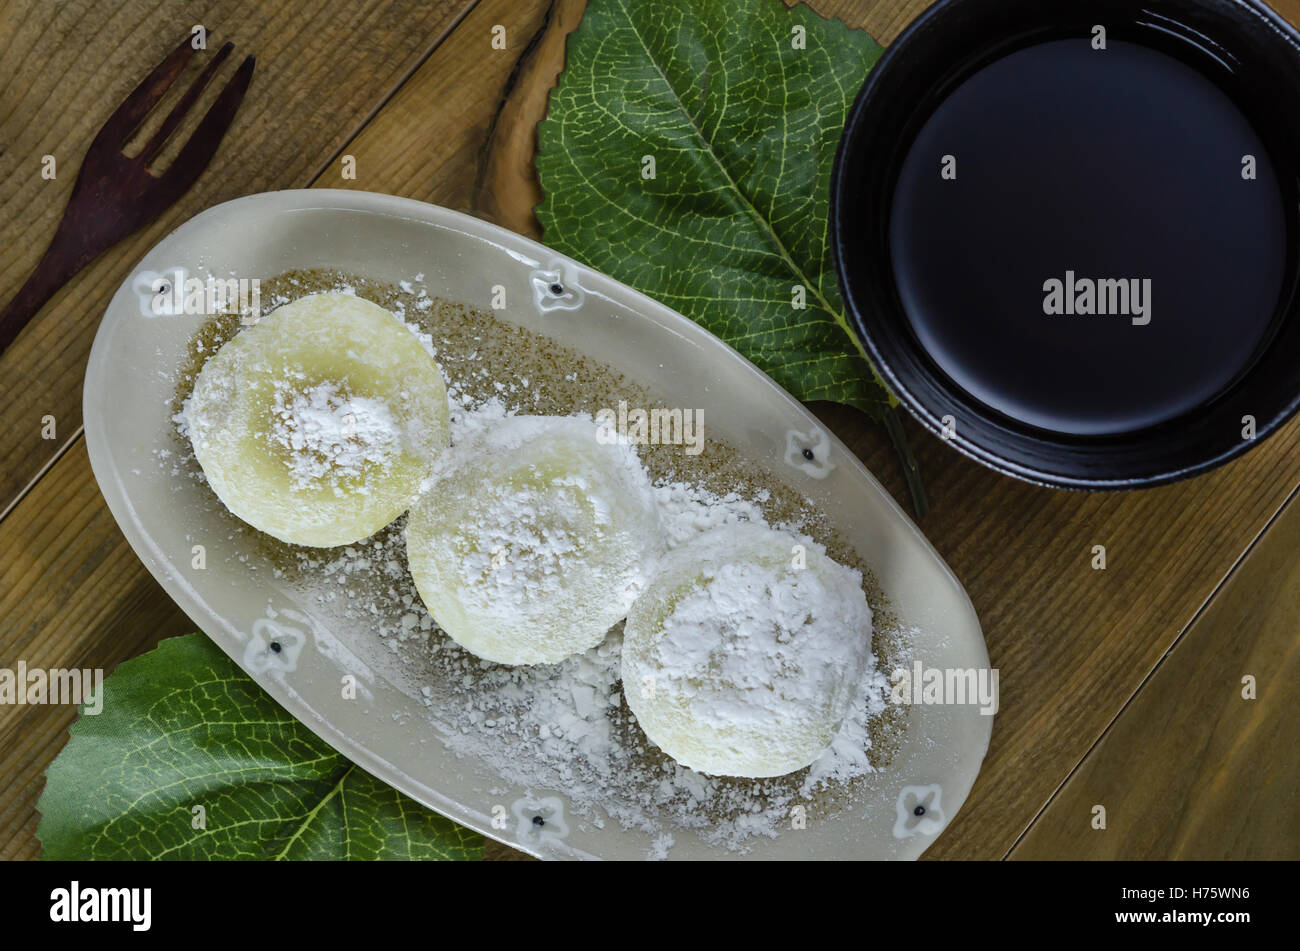 Daifuku Mochi Japanese dessert on dish over wooden background Stock Photo